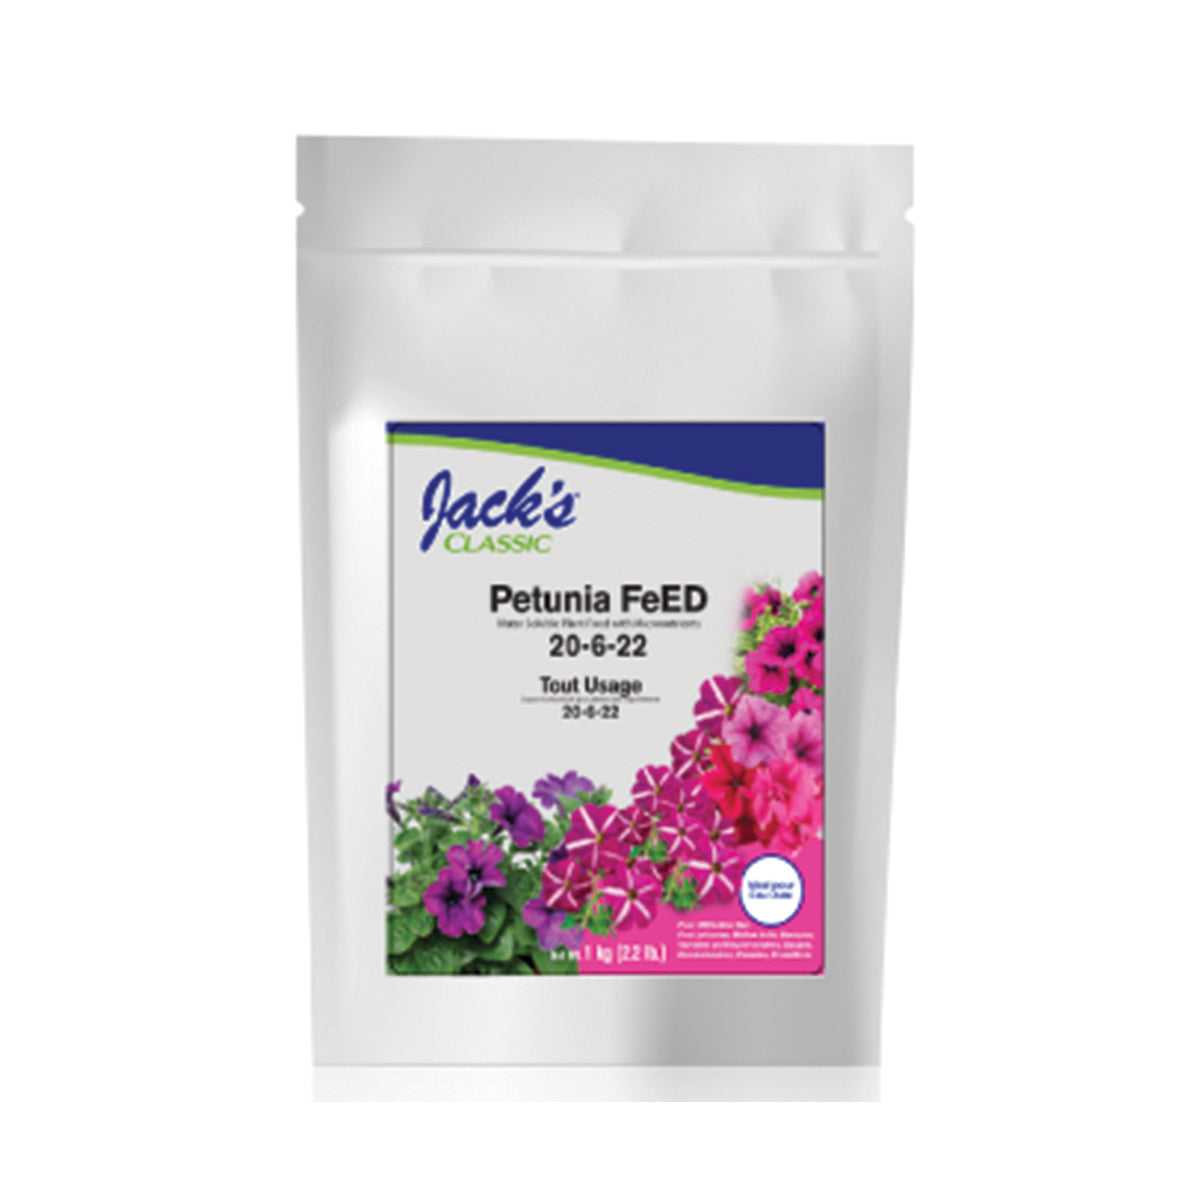 Jack's Classic Petunia FeEd 20-6-22 1 kg